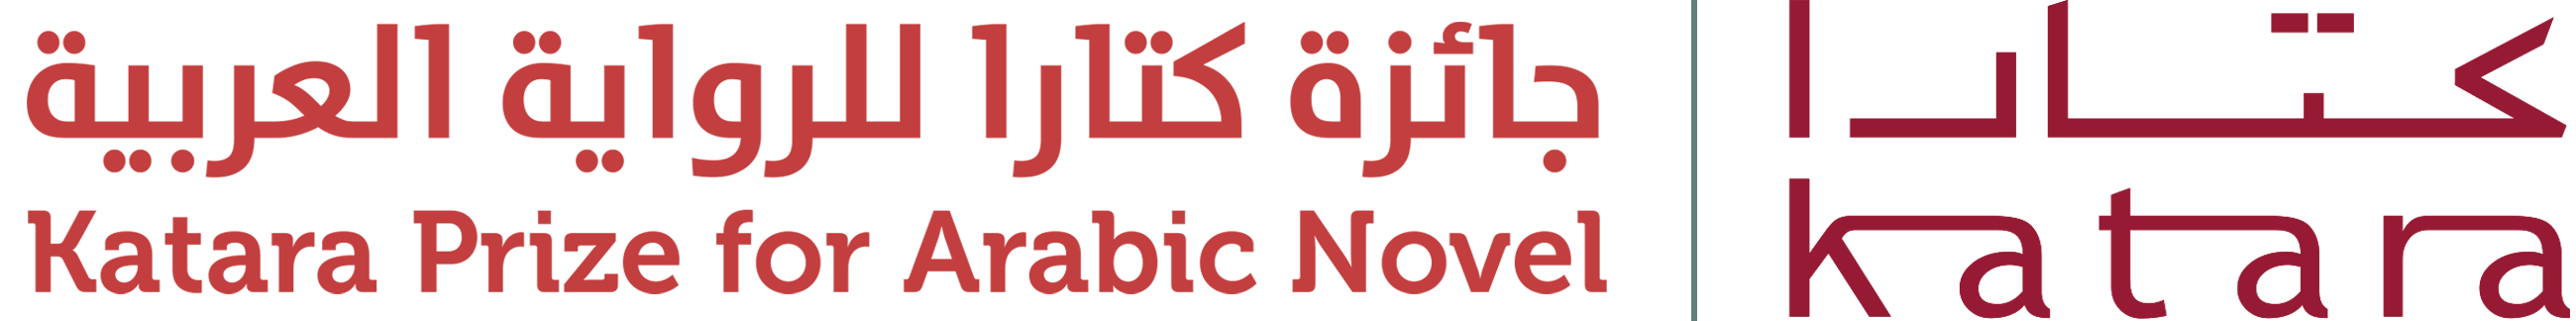 katara for Arabic novel